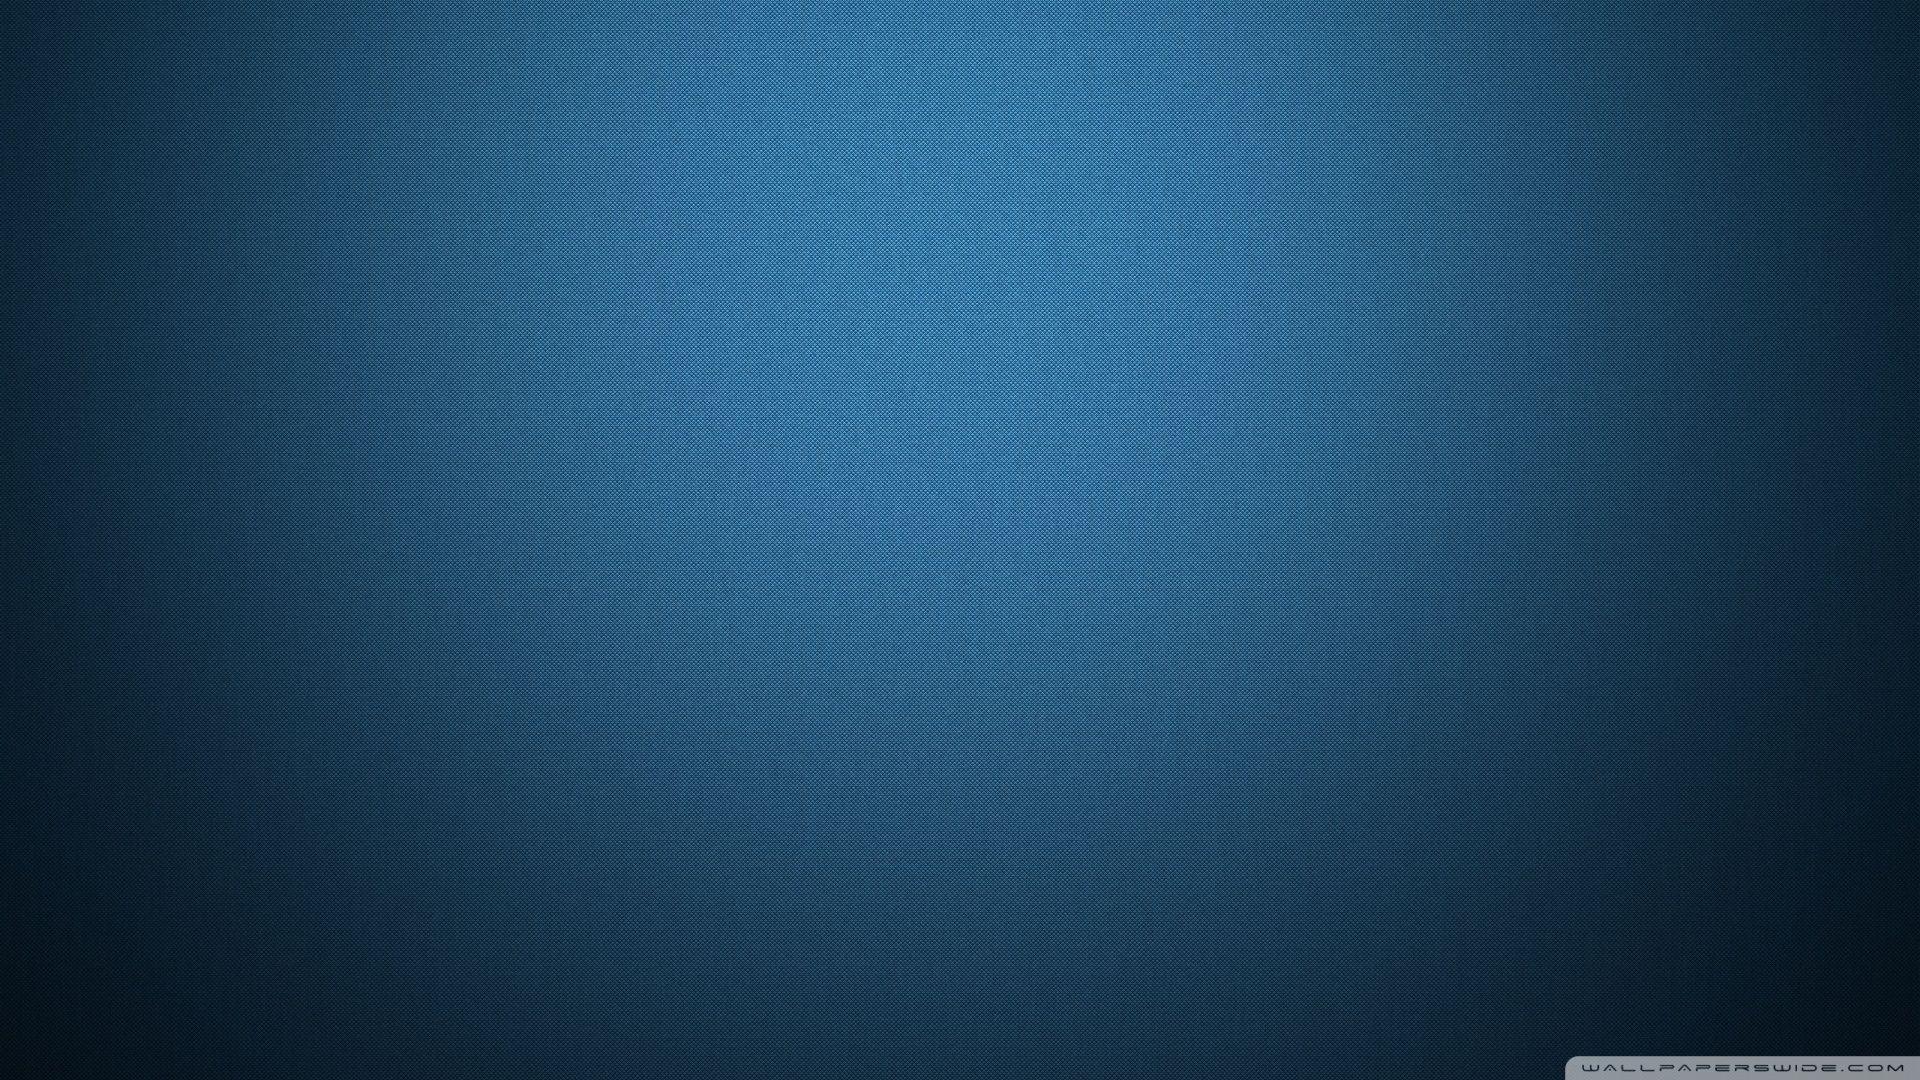 4K Ultra Dark Blue Hd Wallpapers - Top Free 4K Ultra Dark Blue Hd